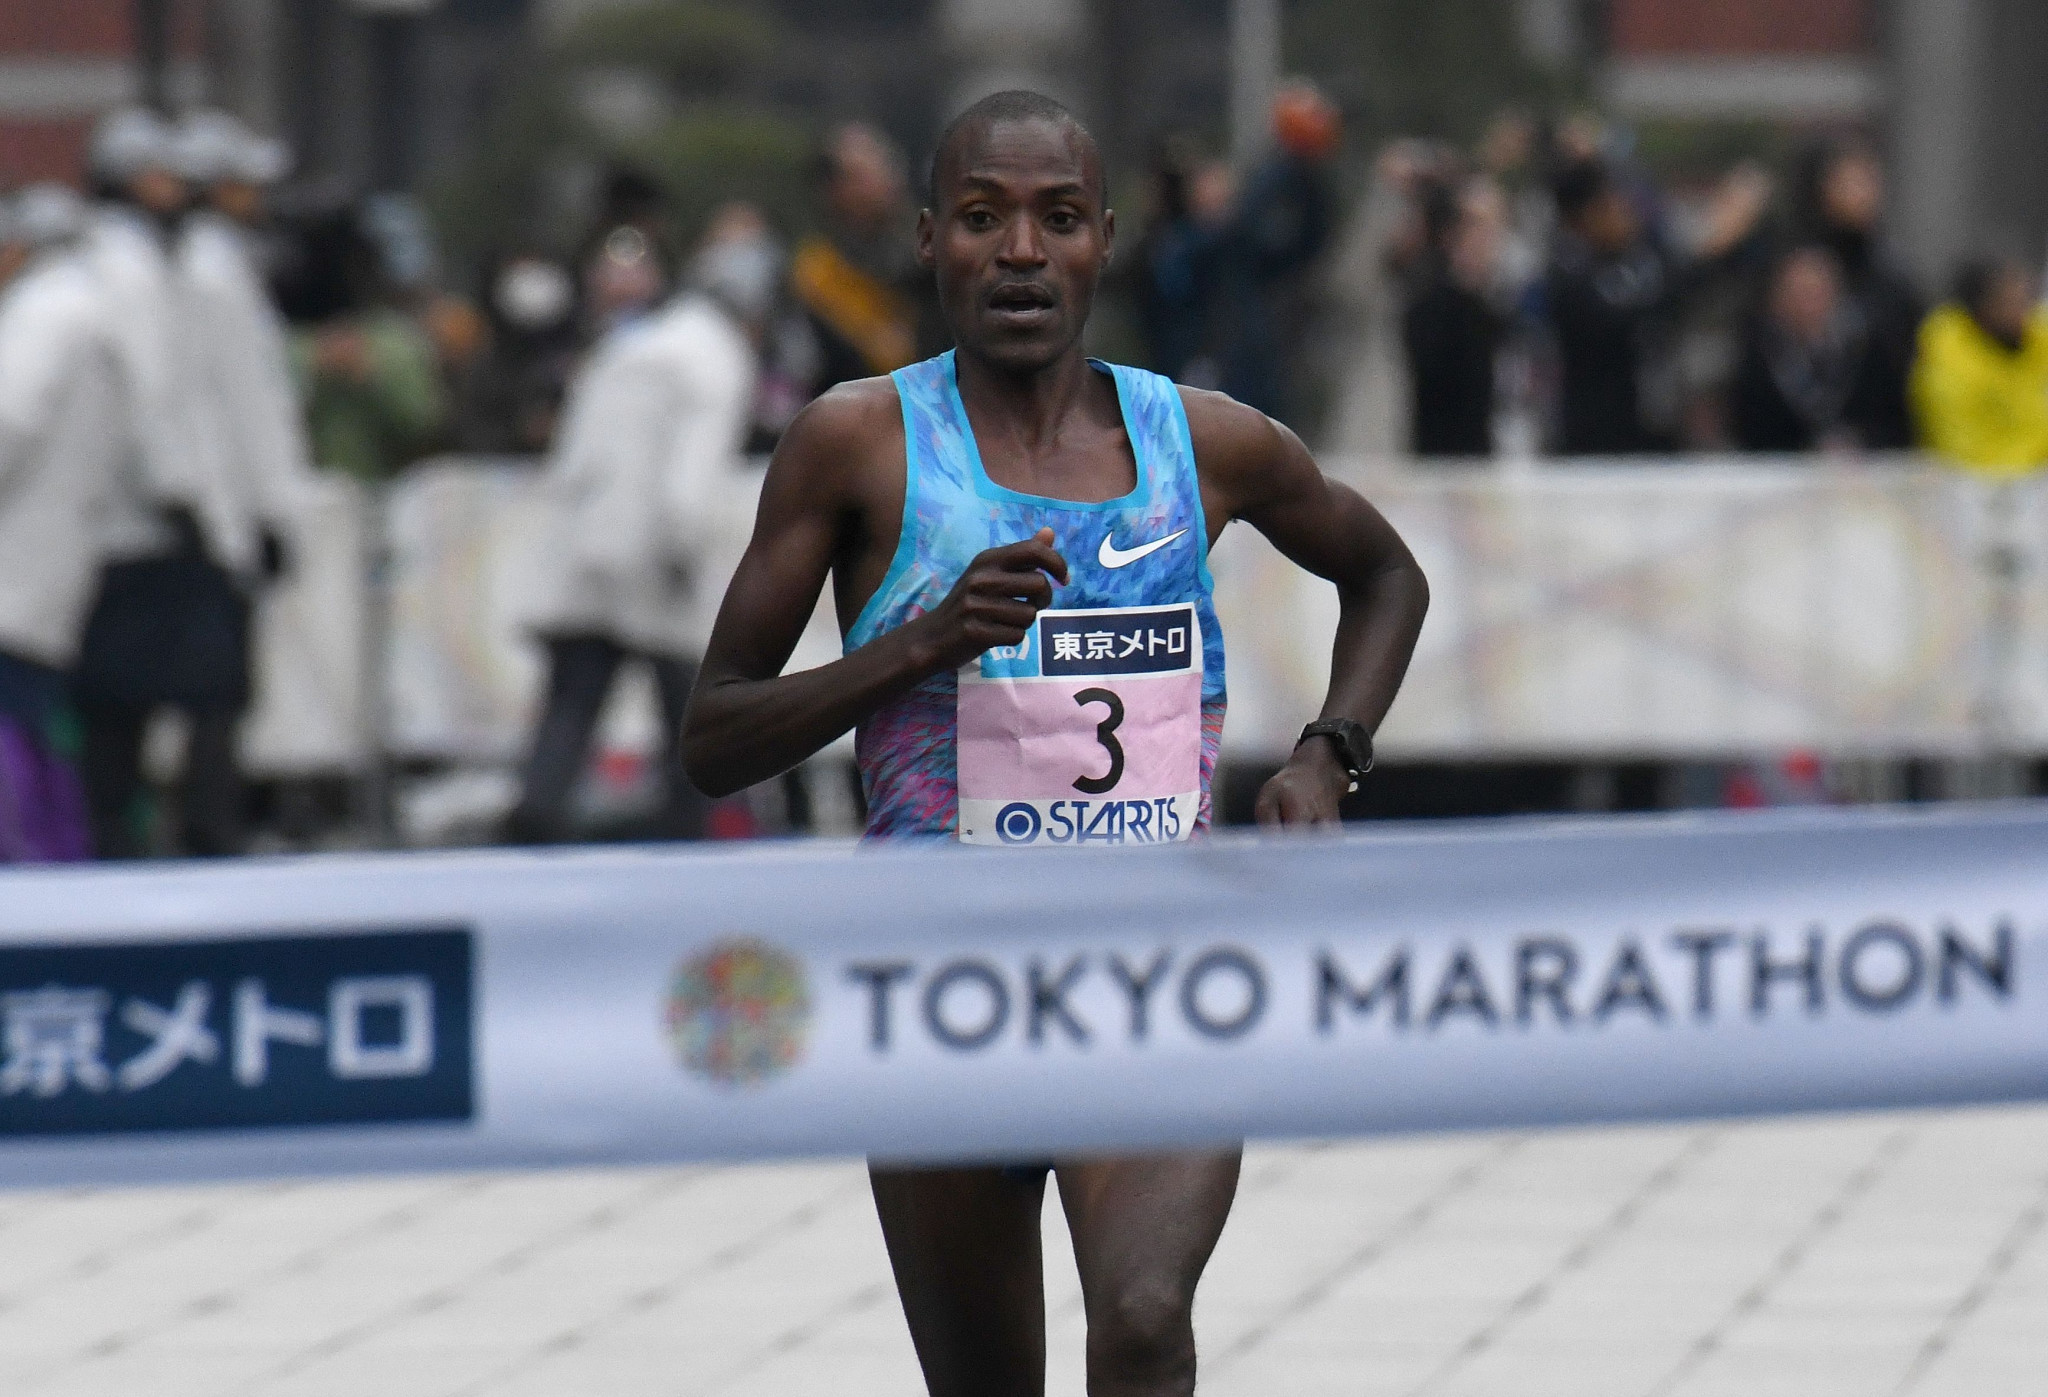 Kenyan chasing hat-trick of titles at Tokyo Marathon but Japanese charge towards 2020 Olympics set to gather momentum